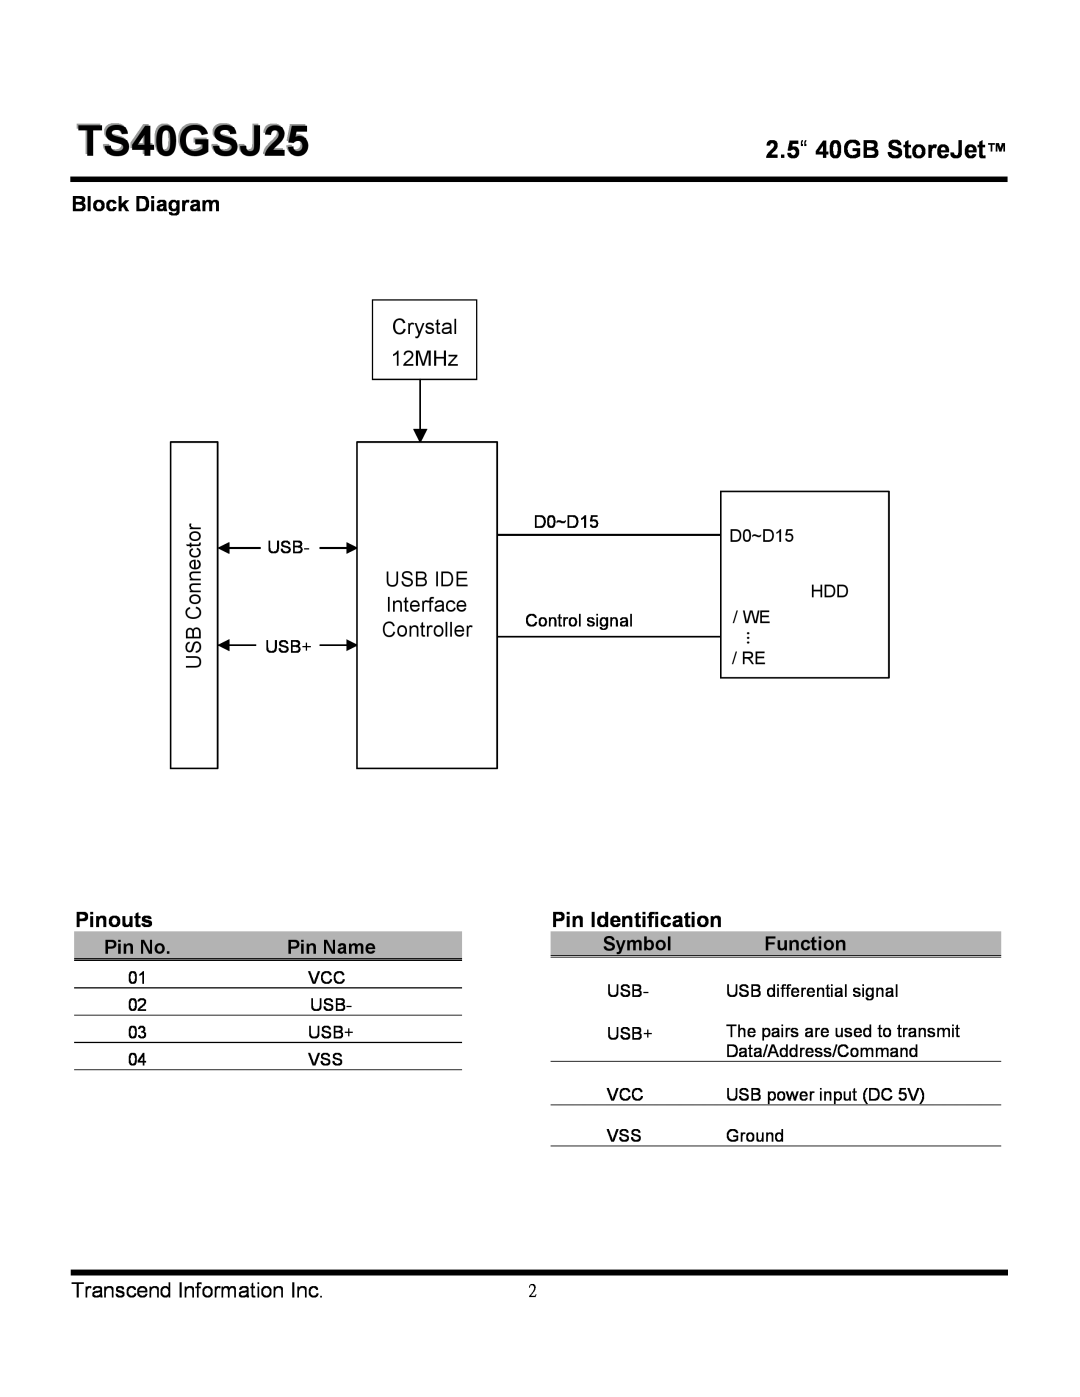 Transcend Information TS40GSJ25 Block Diagram, Pinouts, Pin Identification, 2.5“ 40GB StoreJet, Pin No, Pin Name, Symbol 